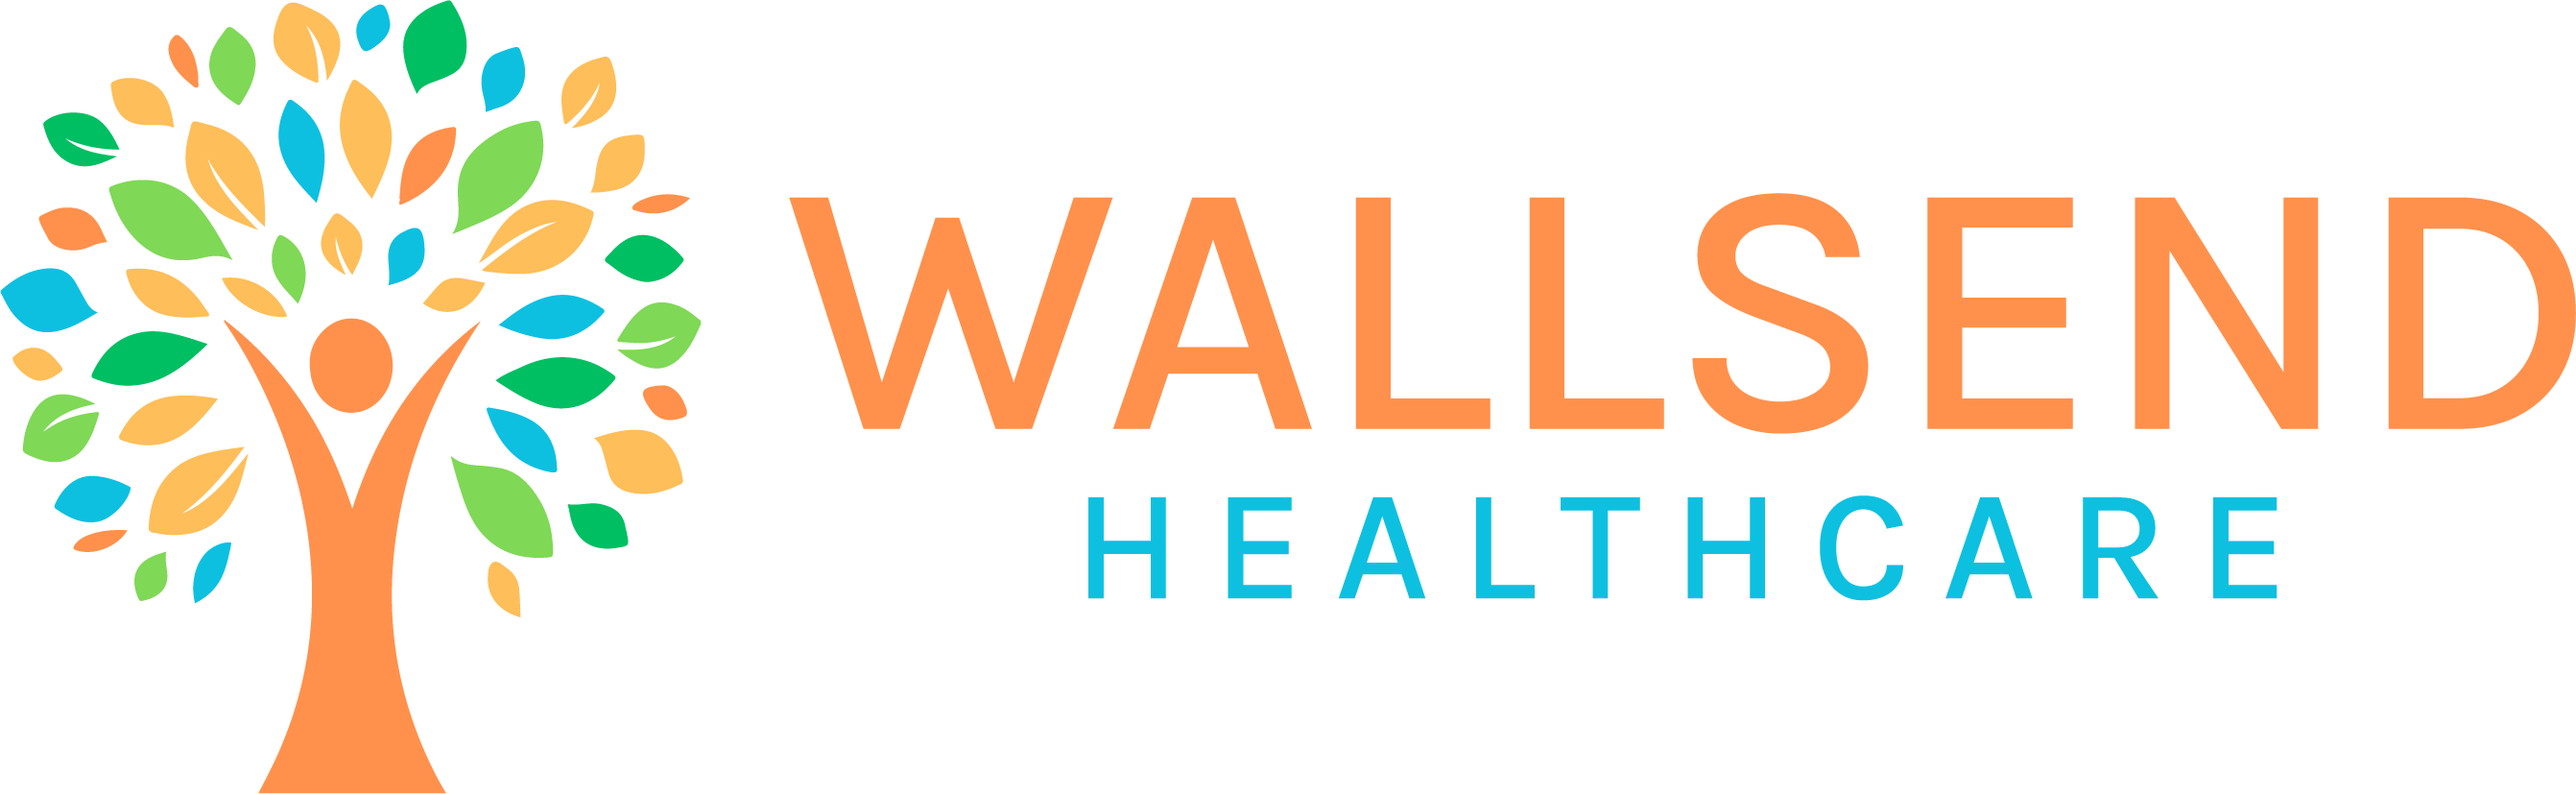 wallsend healthcare practice